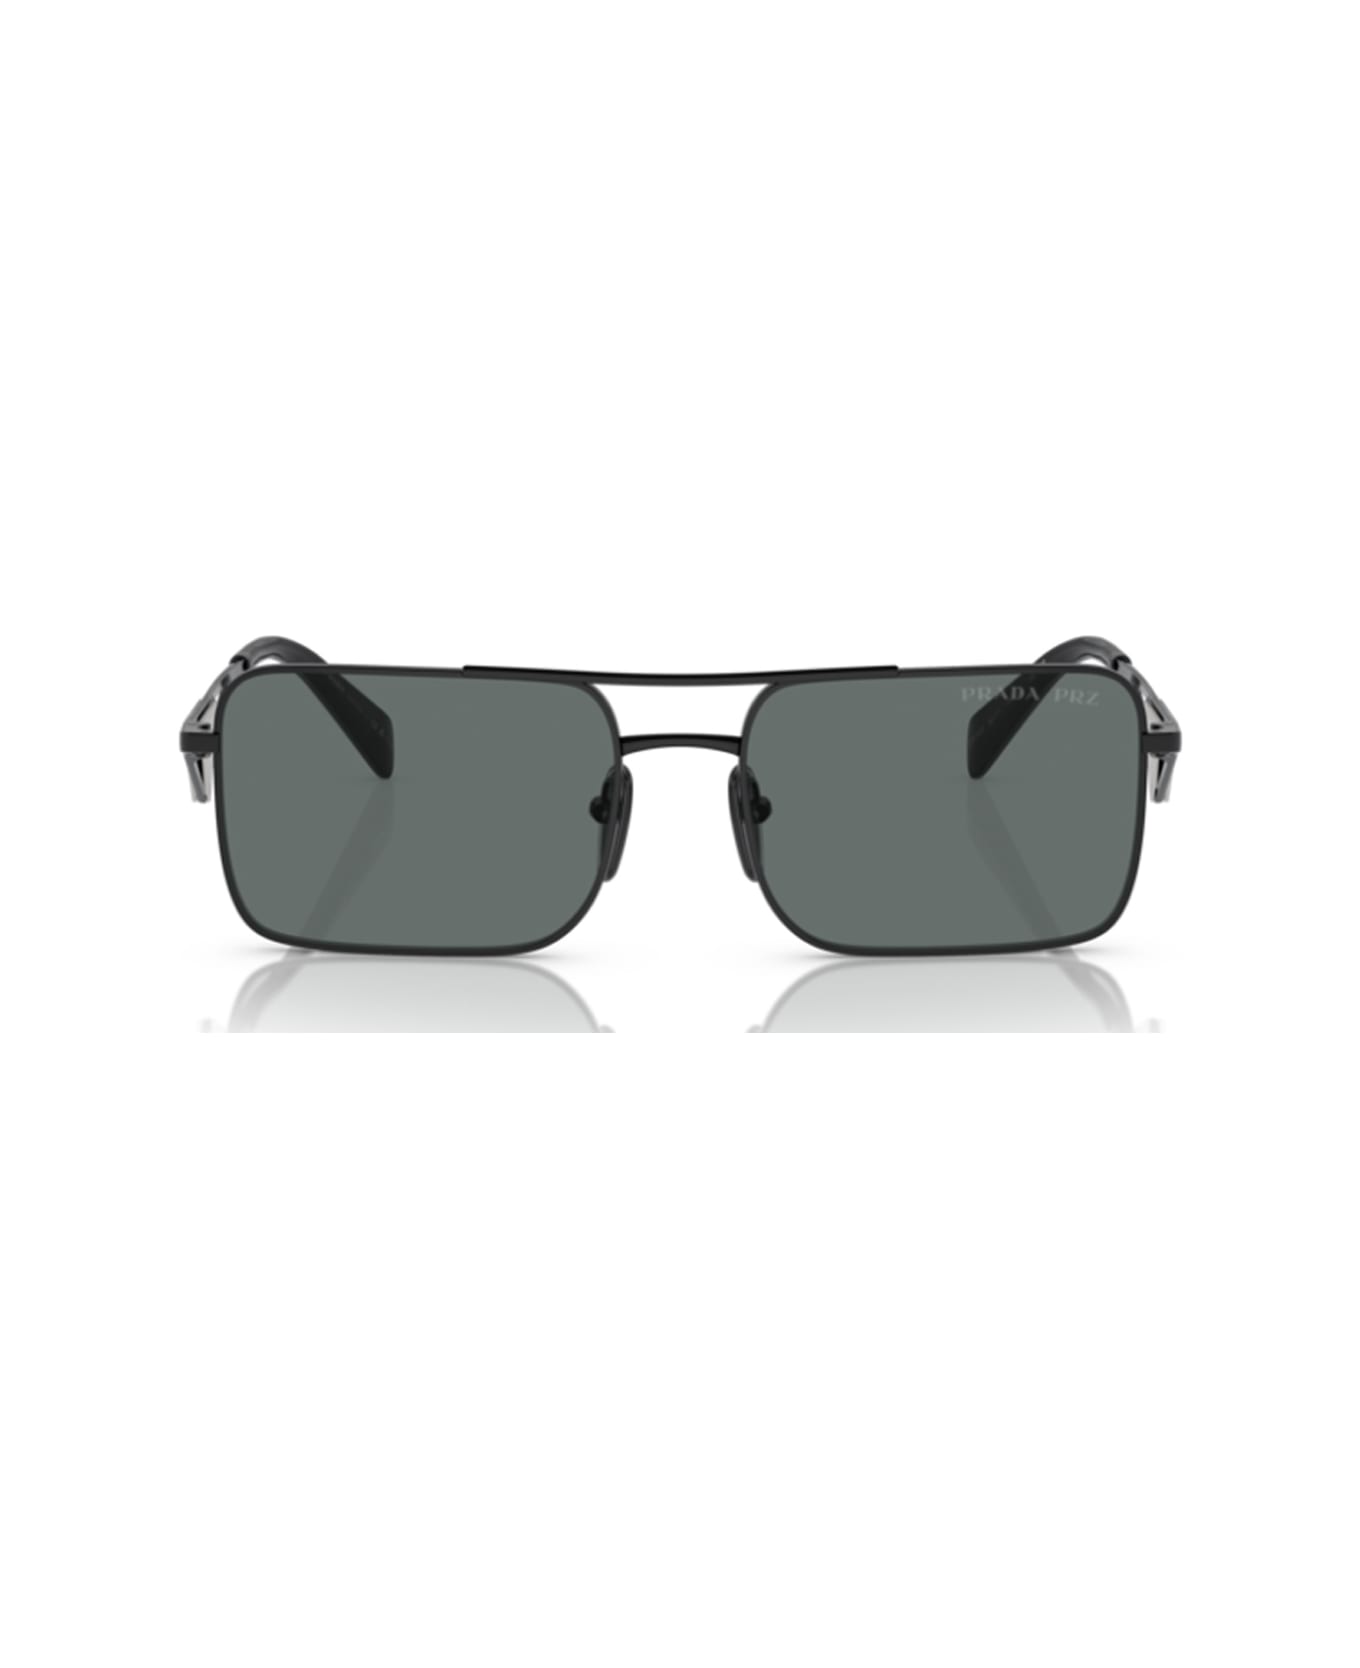 Prada Eyewear Pra52s 1ab5z1 Sunglasses - Nero